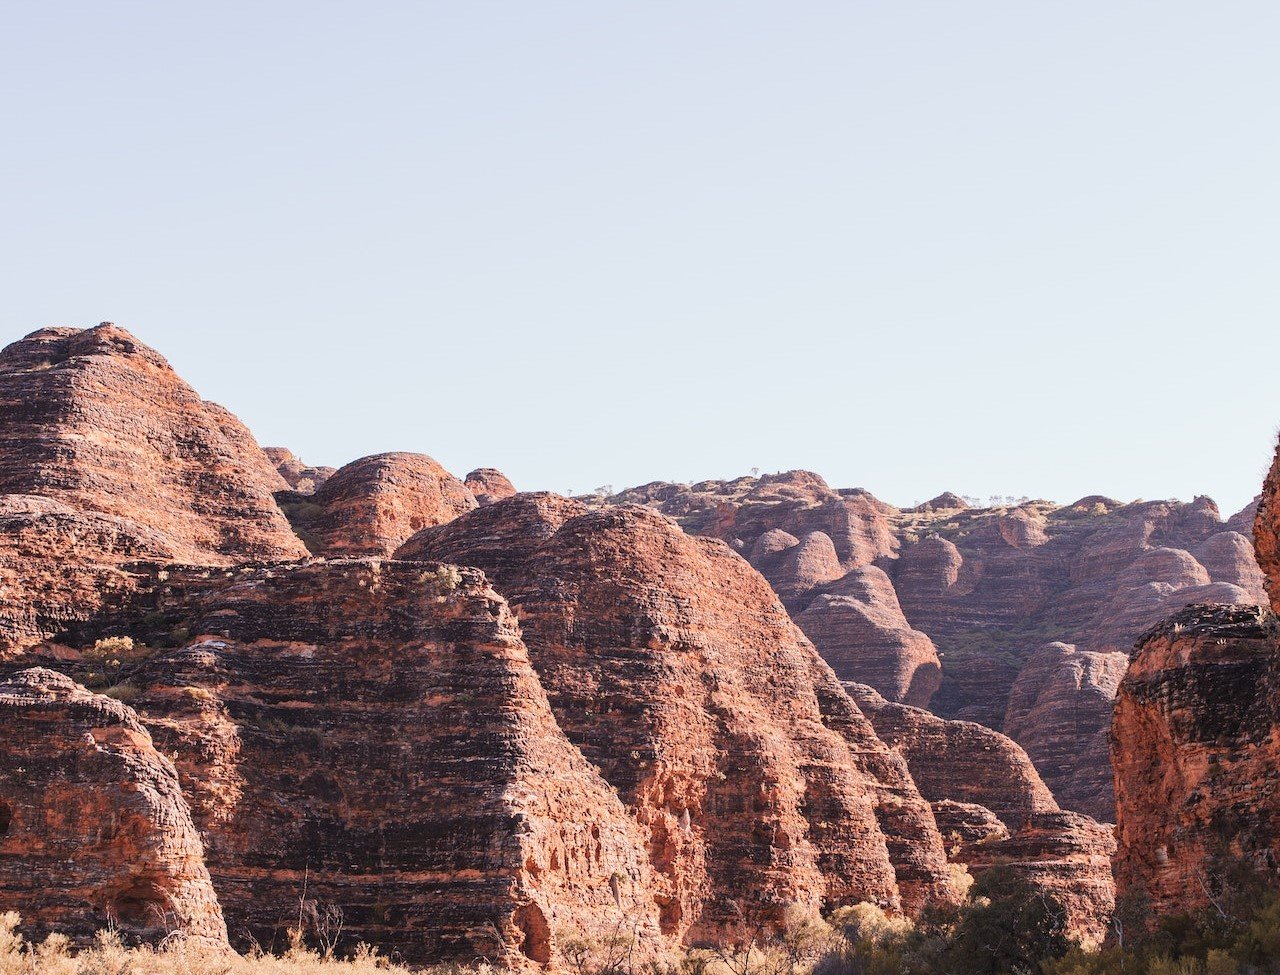 De rode rotsen van Bungle Bungle Range in Australië